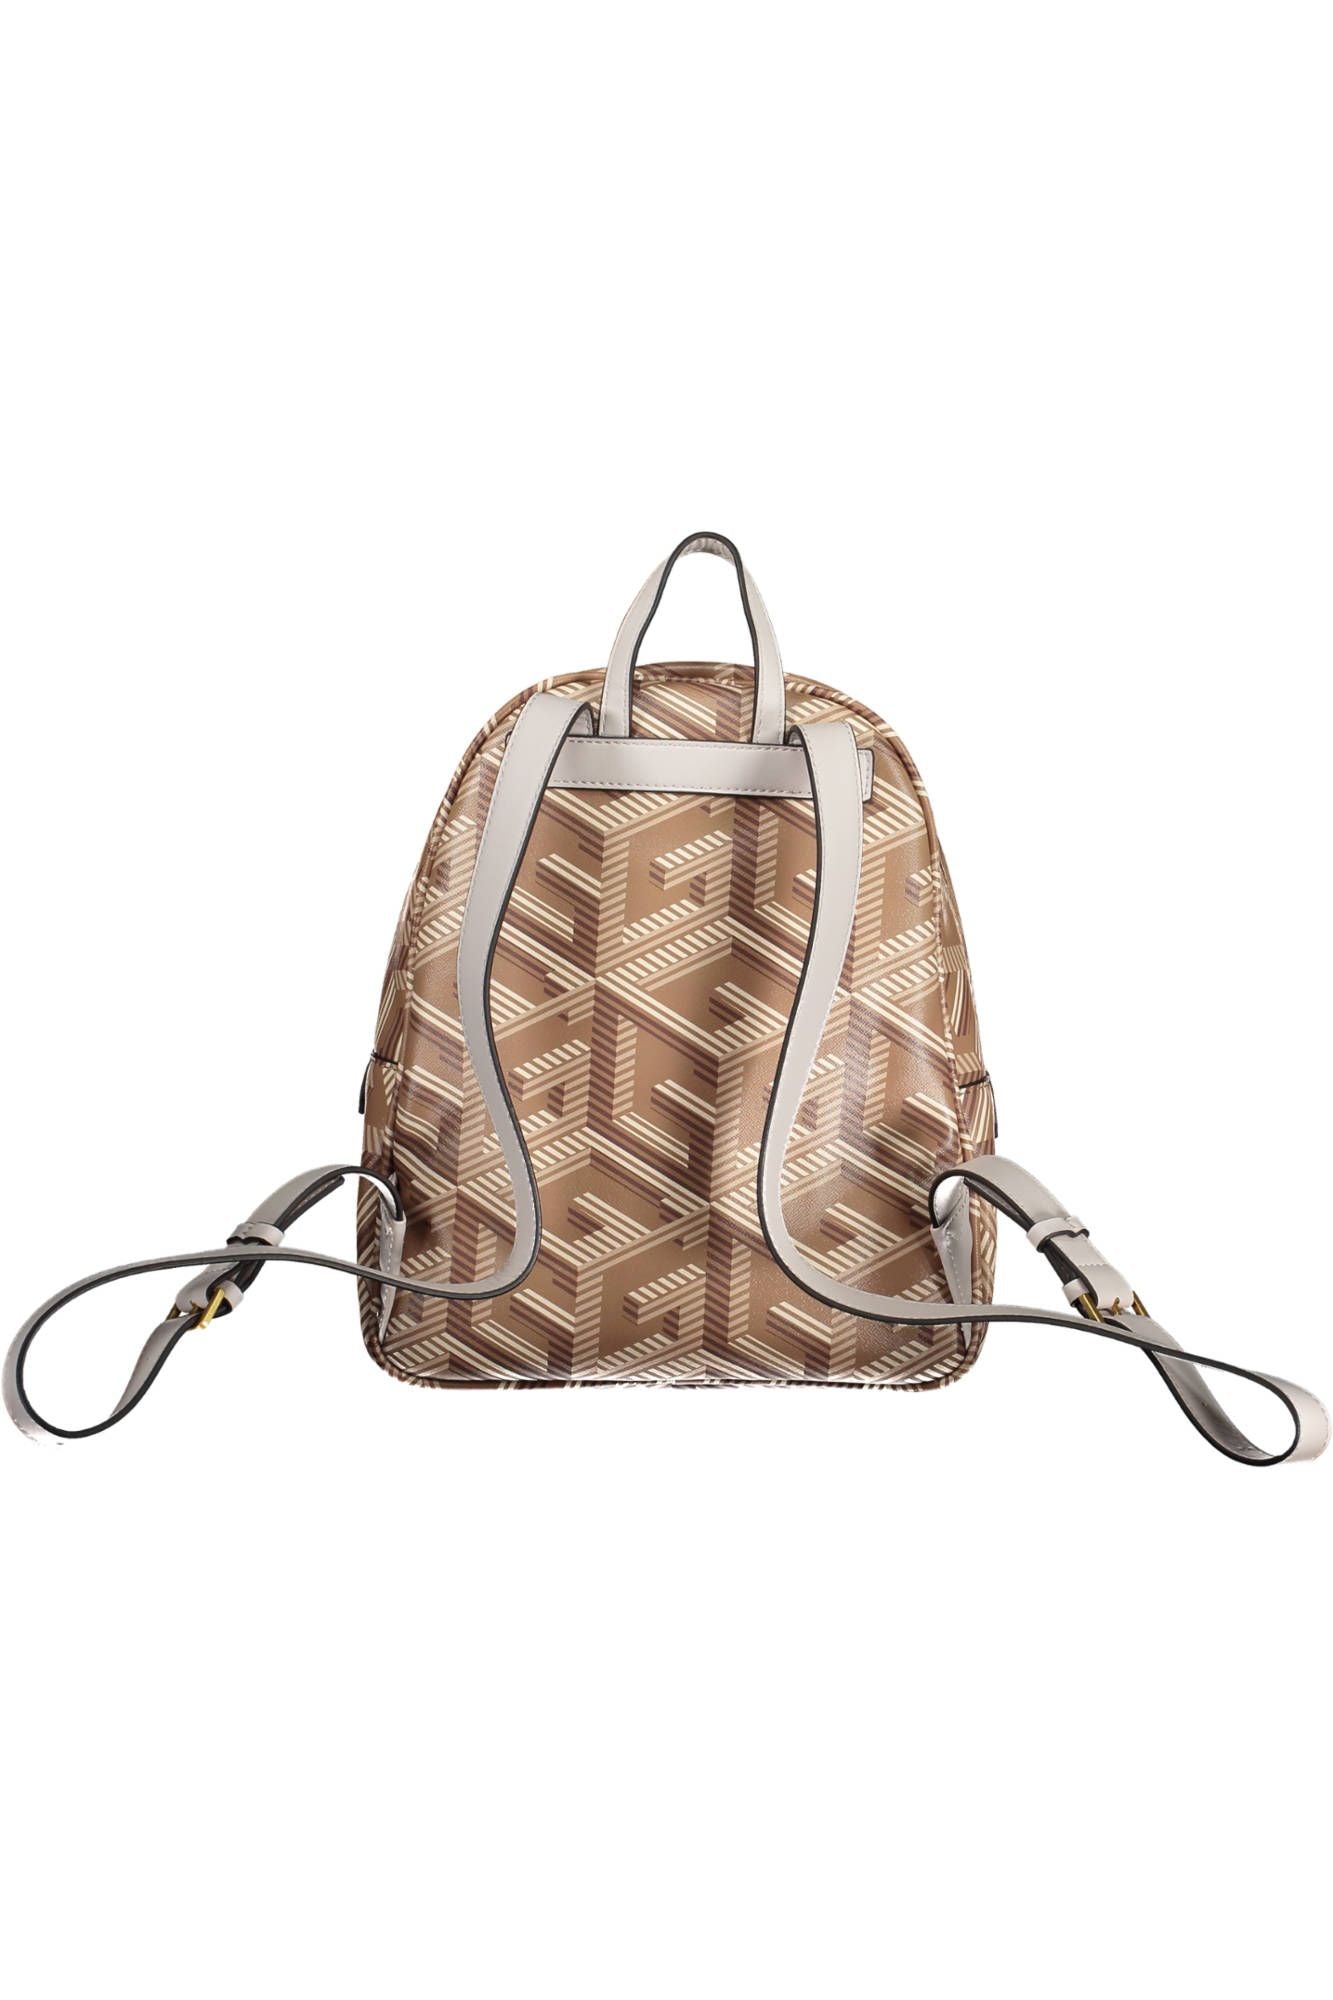 Chic Brown Backpack with Elegant Logo Detailing